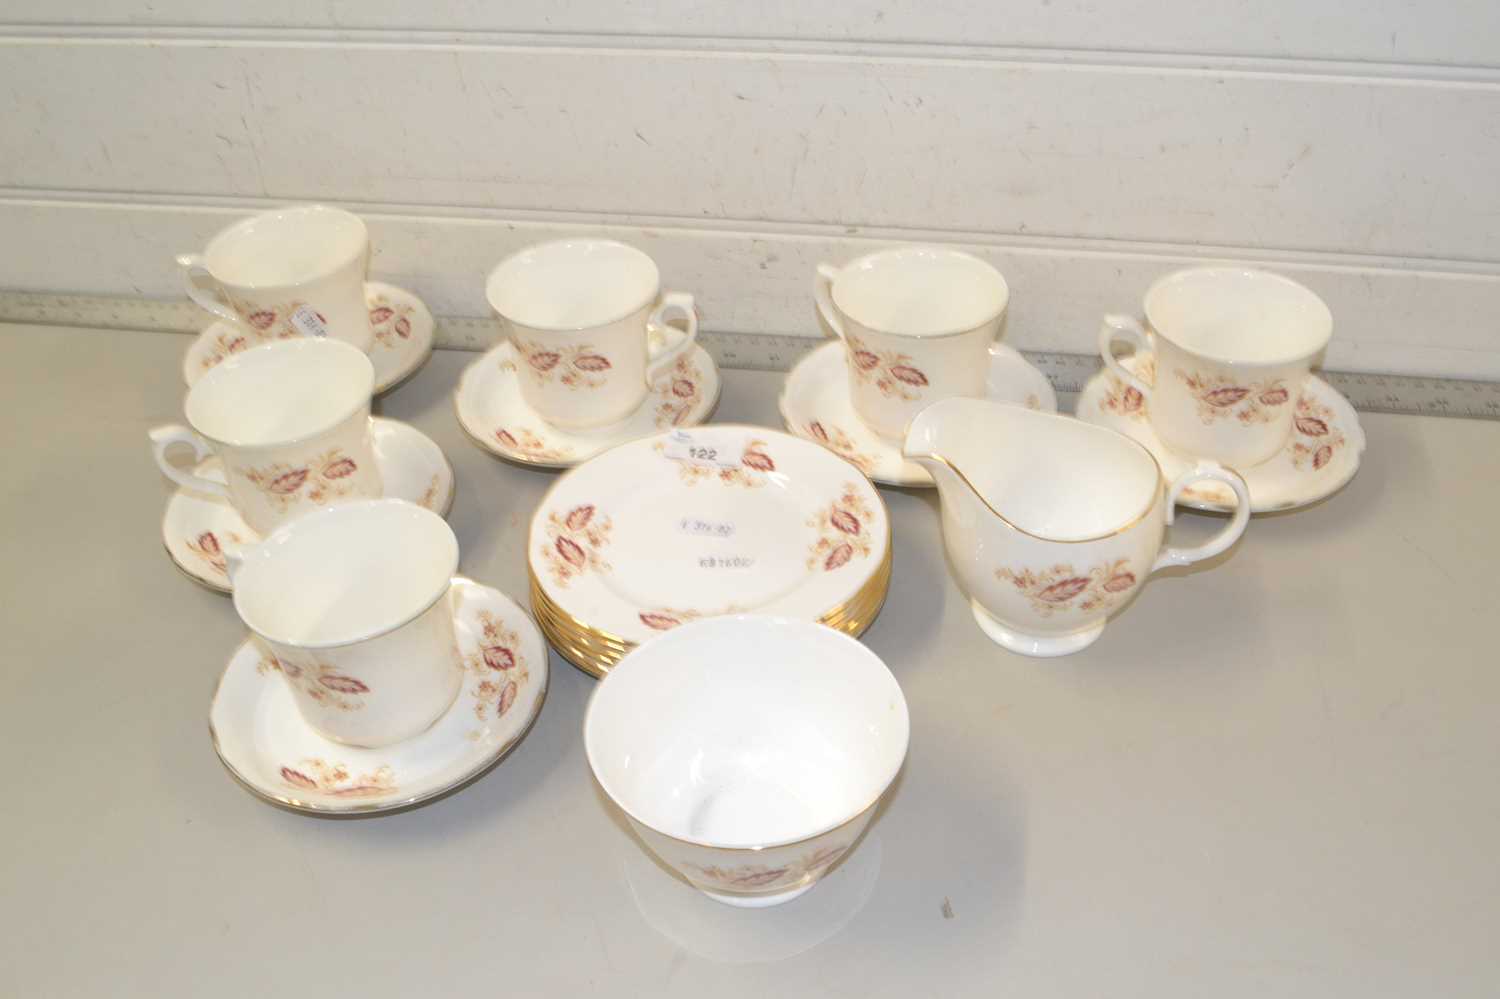 Quantity of Royal Osborne floral decorated tea wares